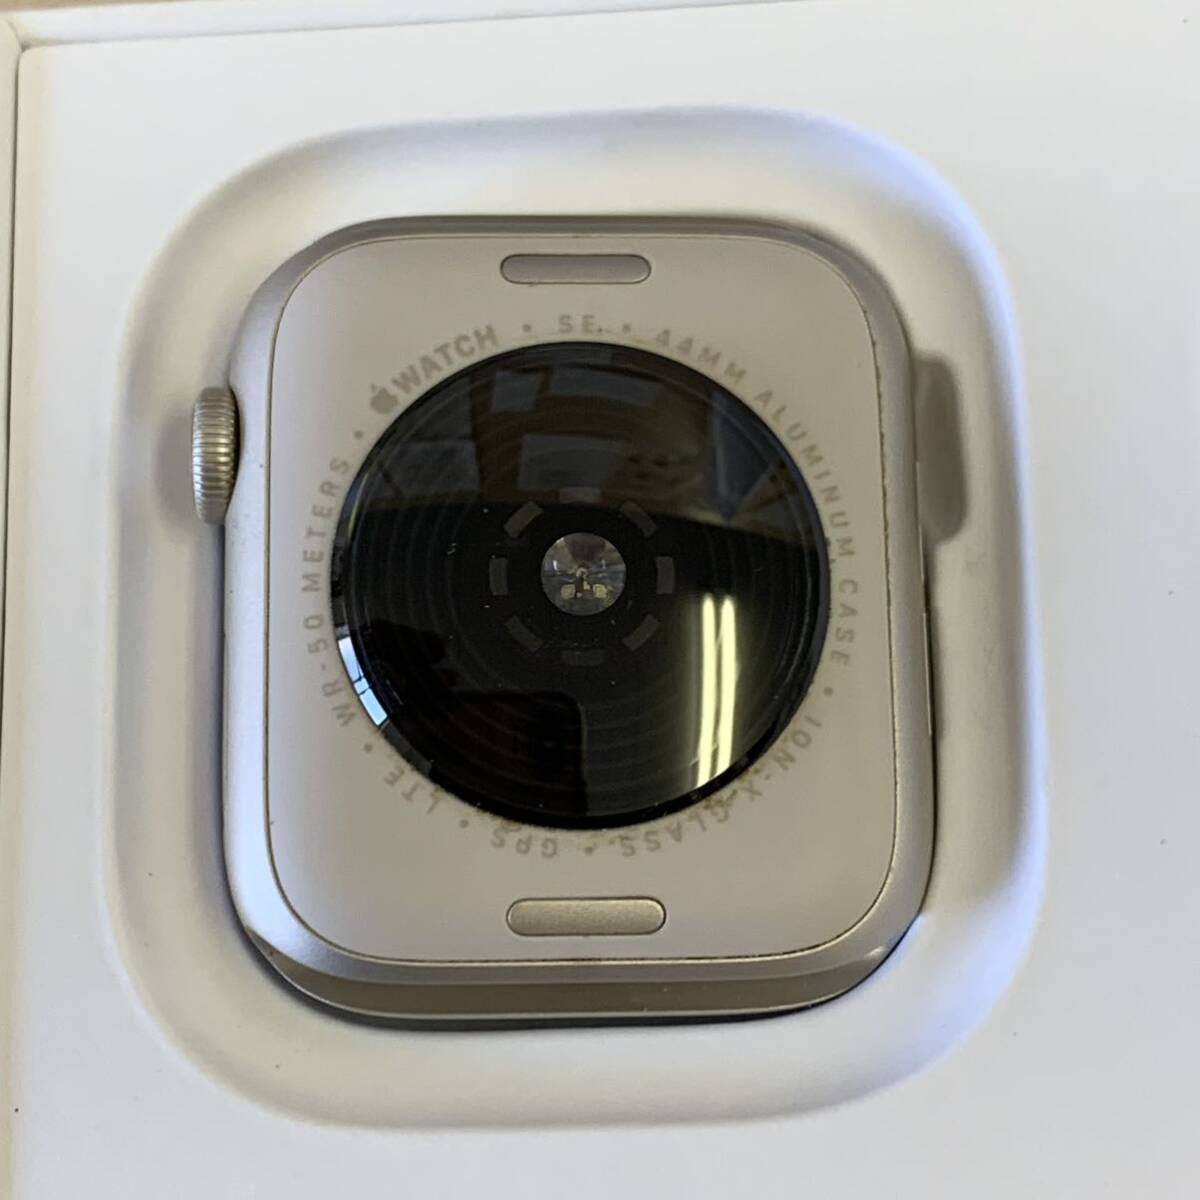 [T0420]Applewatch SE A2724 44mm GPS+cellular модель no. 2 поколение Apple часы часы часы Apple товар электризация проверка settled 